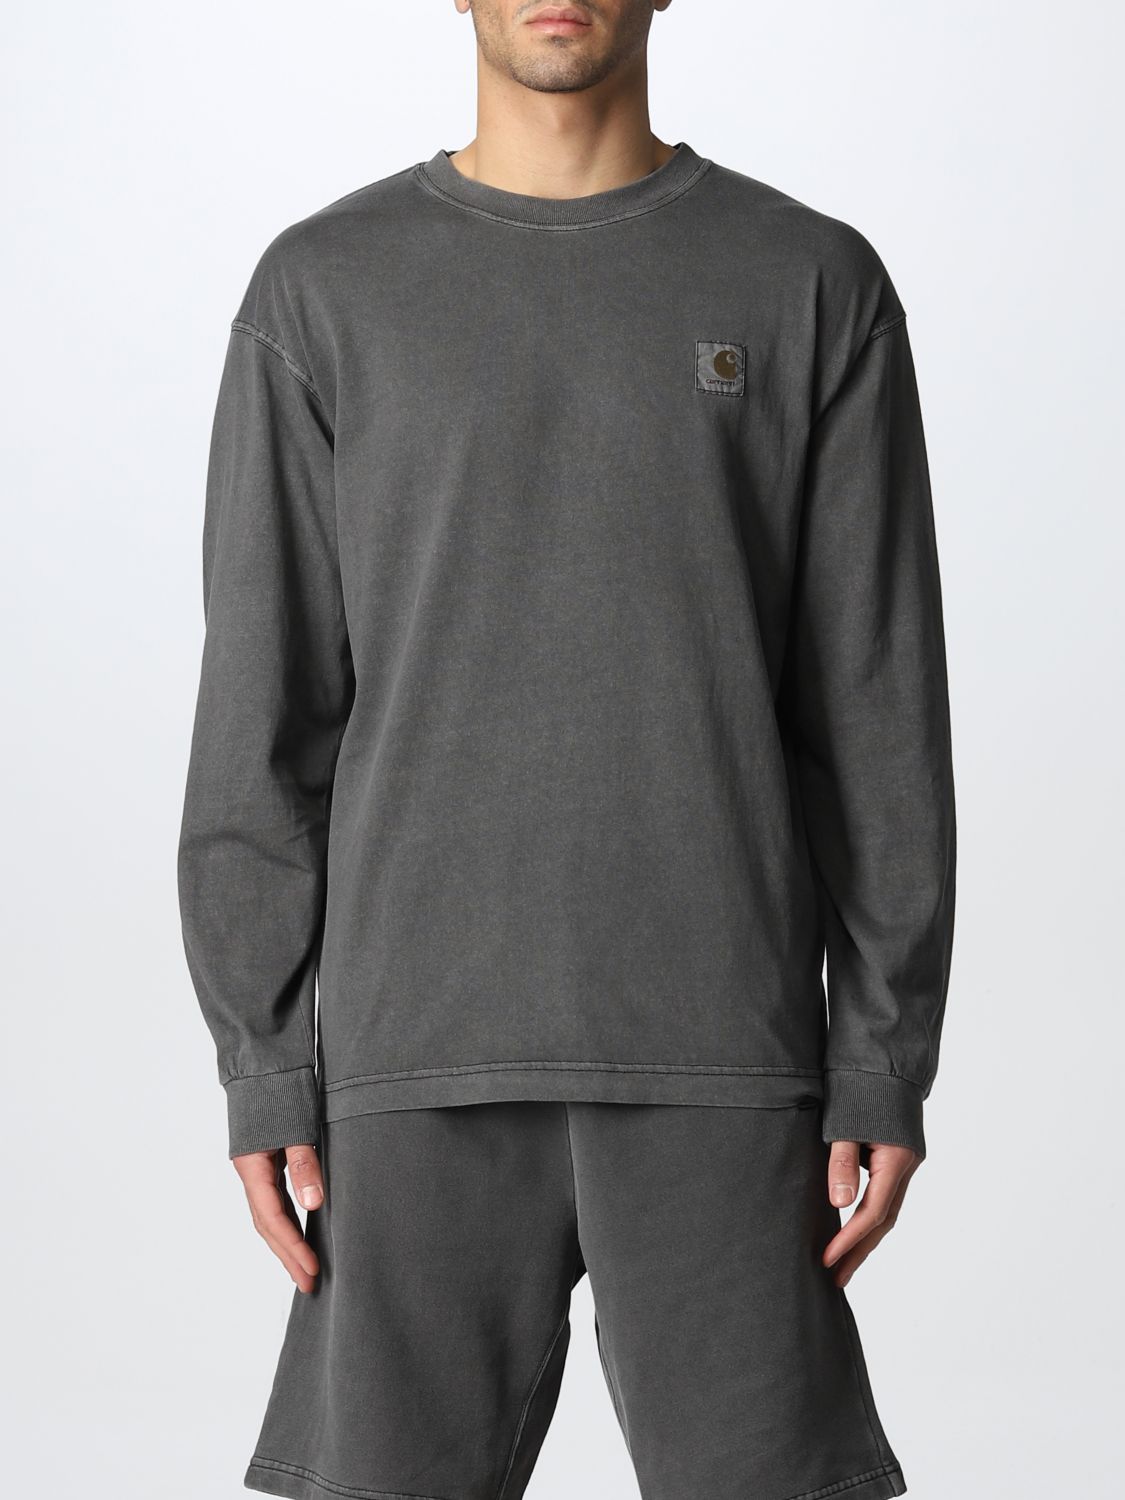 CARHARTT WIP: sweatshirt with logo - Black | Carhartt Wip sweatshirt ...